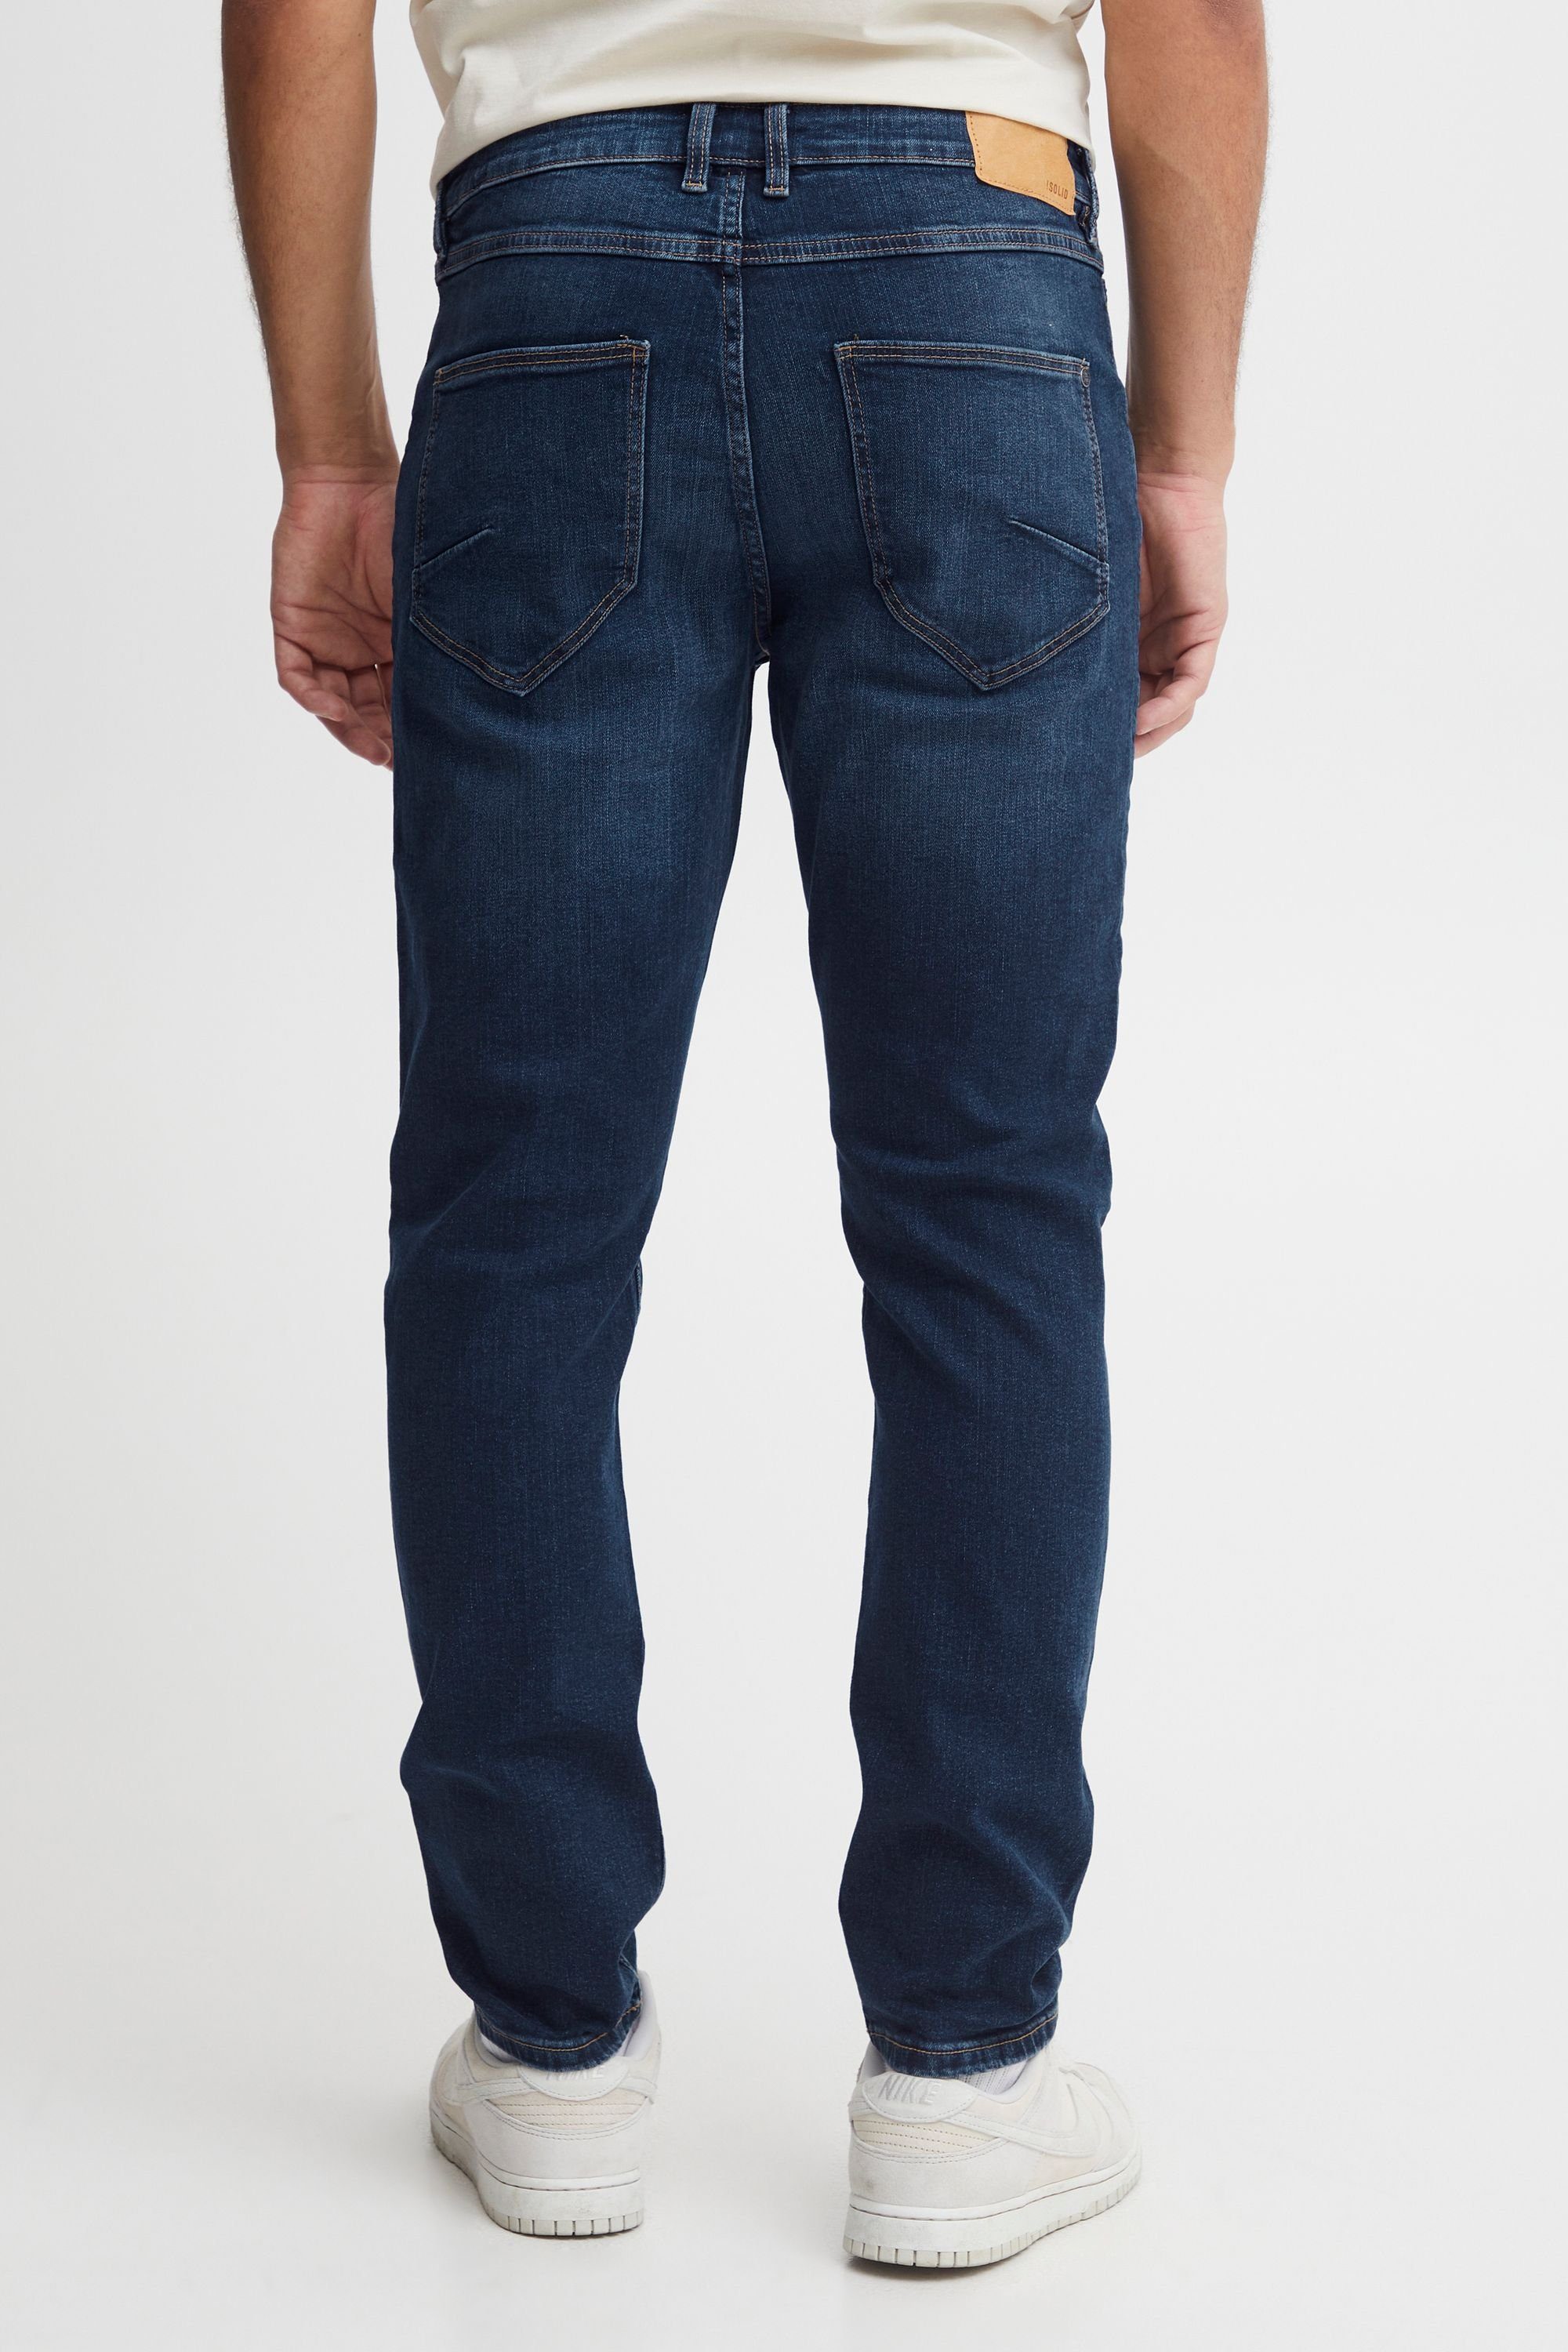 Solid Slim-fit-Jeans SDDunley Joy (700031) Dark denim 21107404 - blue